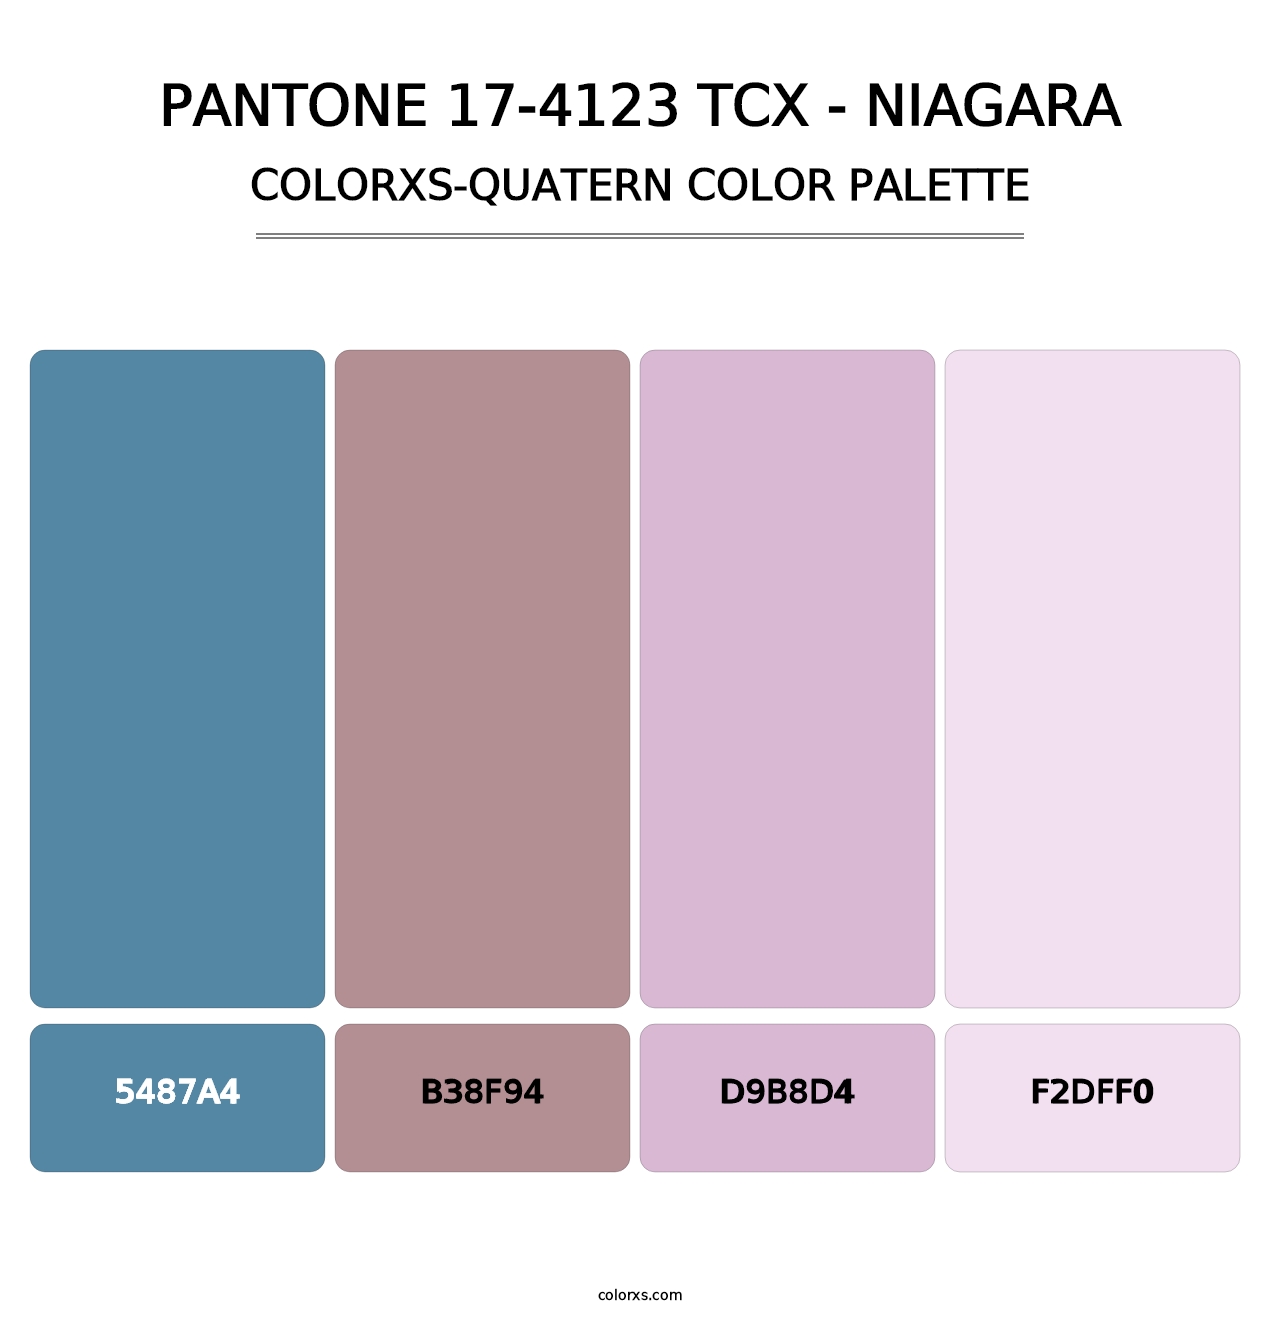 PANTONE 17-4123 TCX - Niagara - Colorxs Quatern Palette